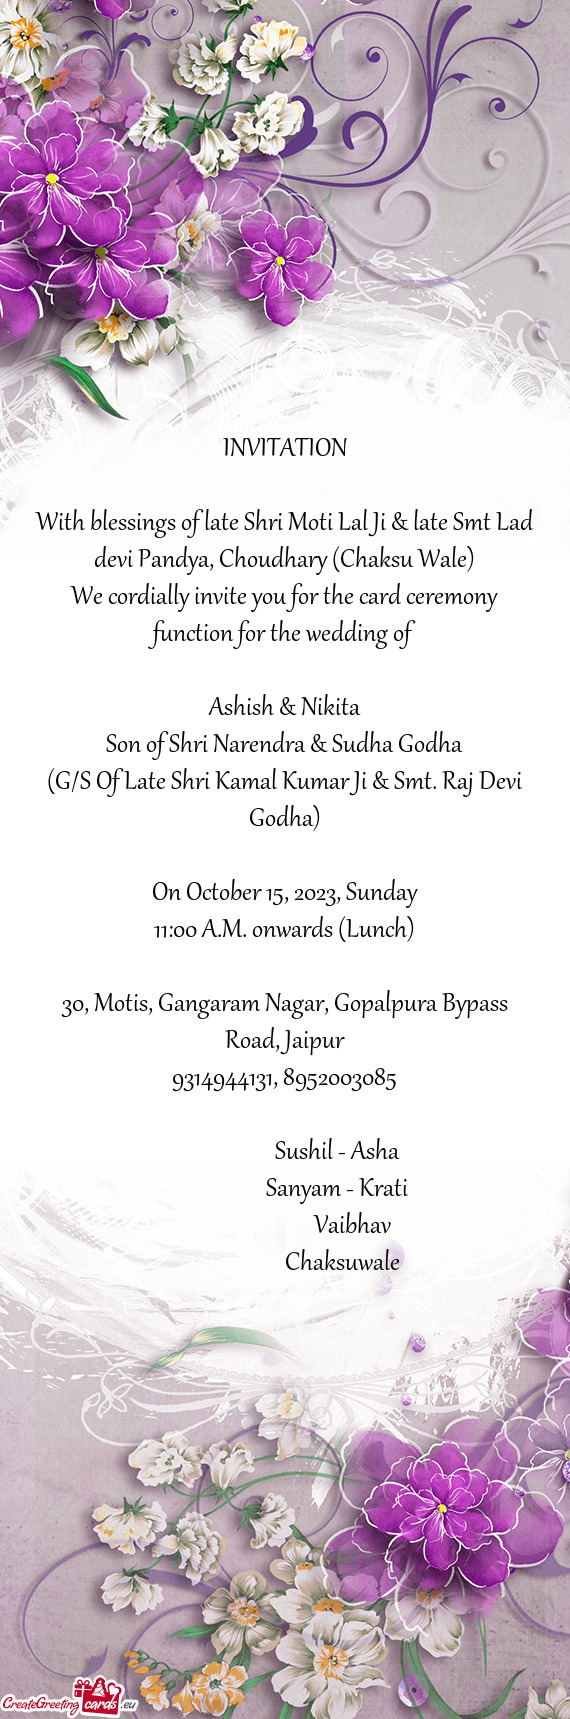 With blessings of late Shri Moti Lal Ji & late Smt Lad devi Pandya, Choudhary (Chaksu Wale)